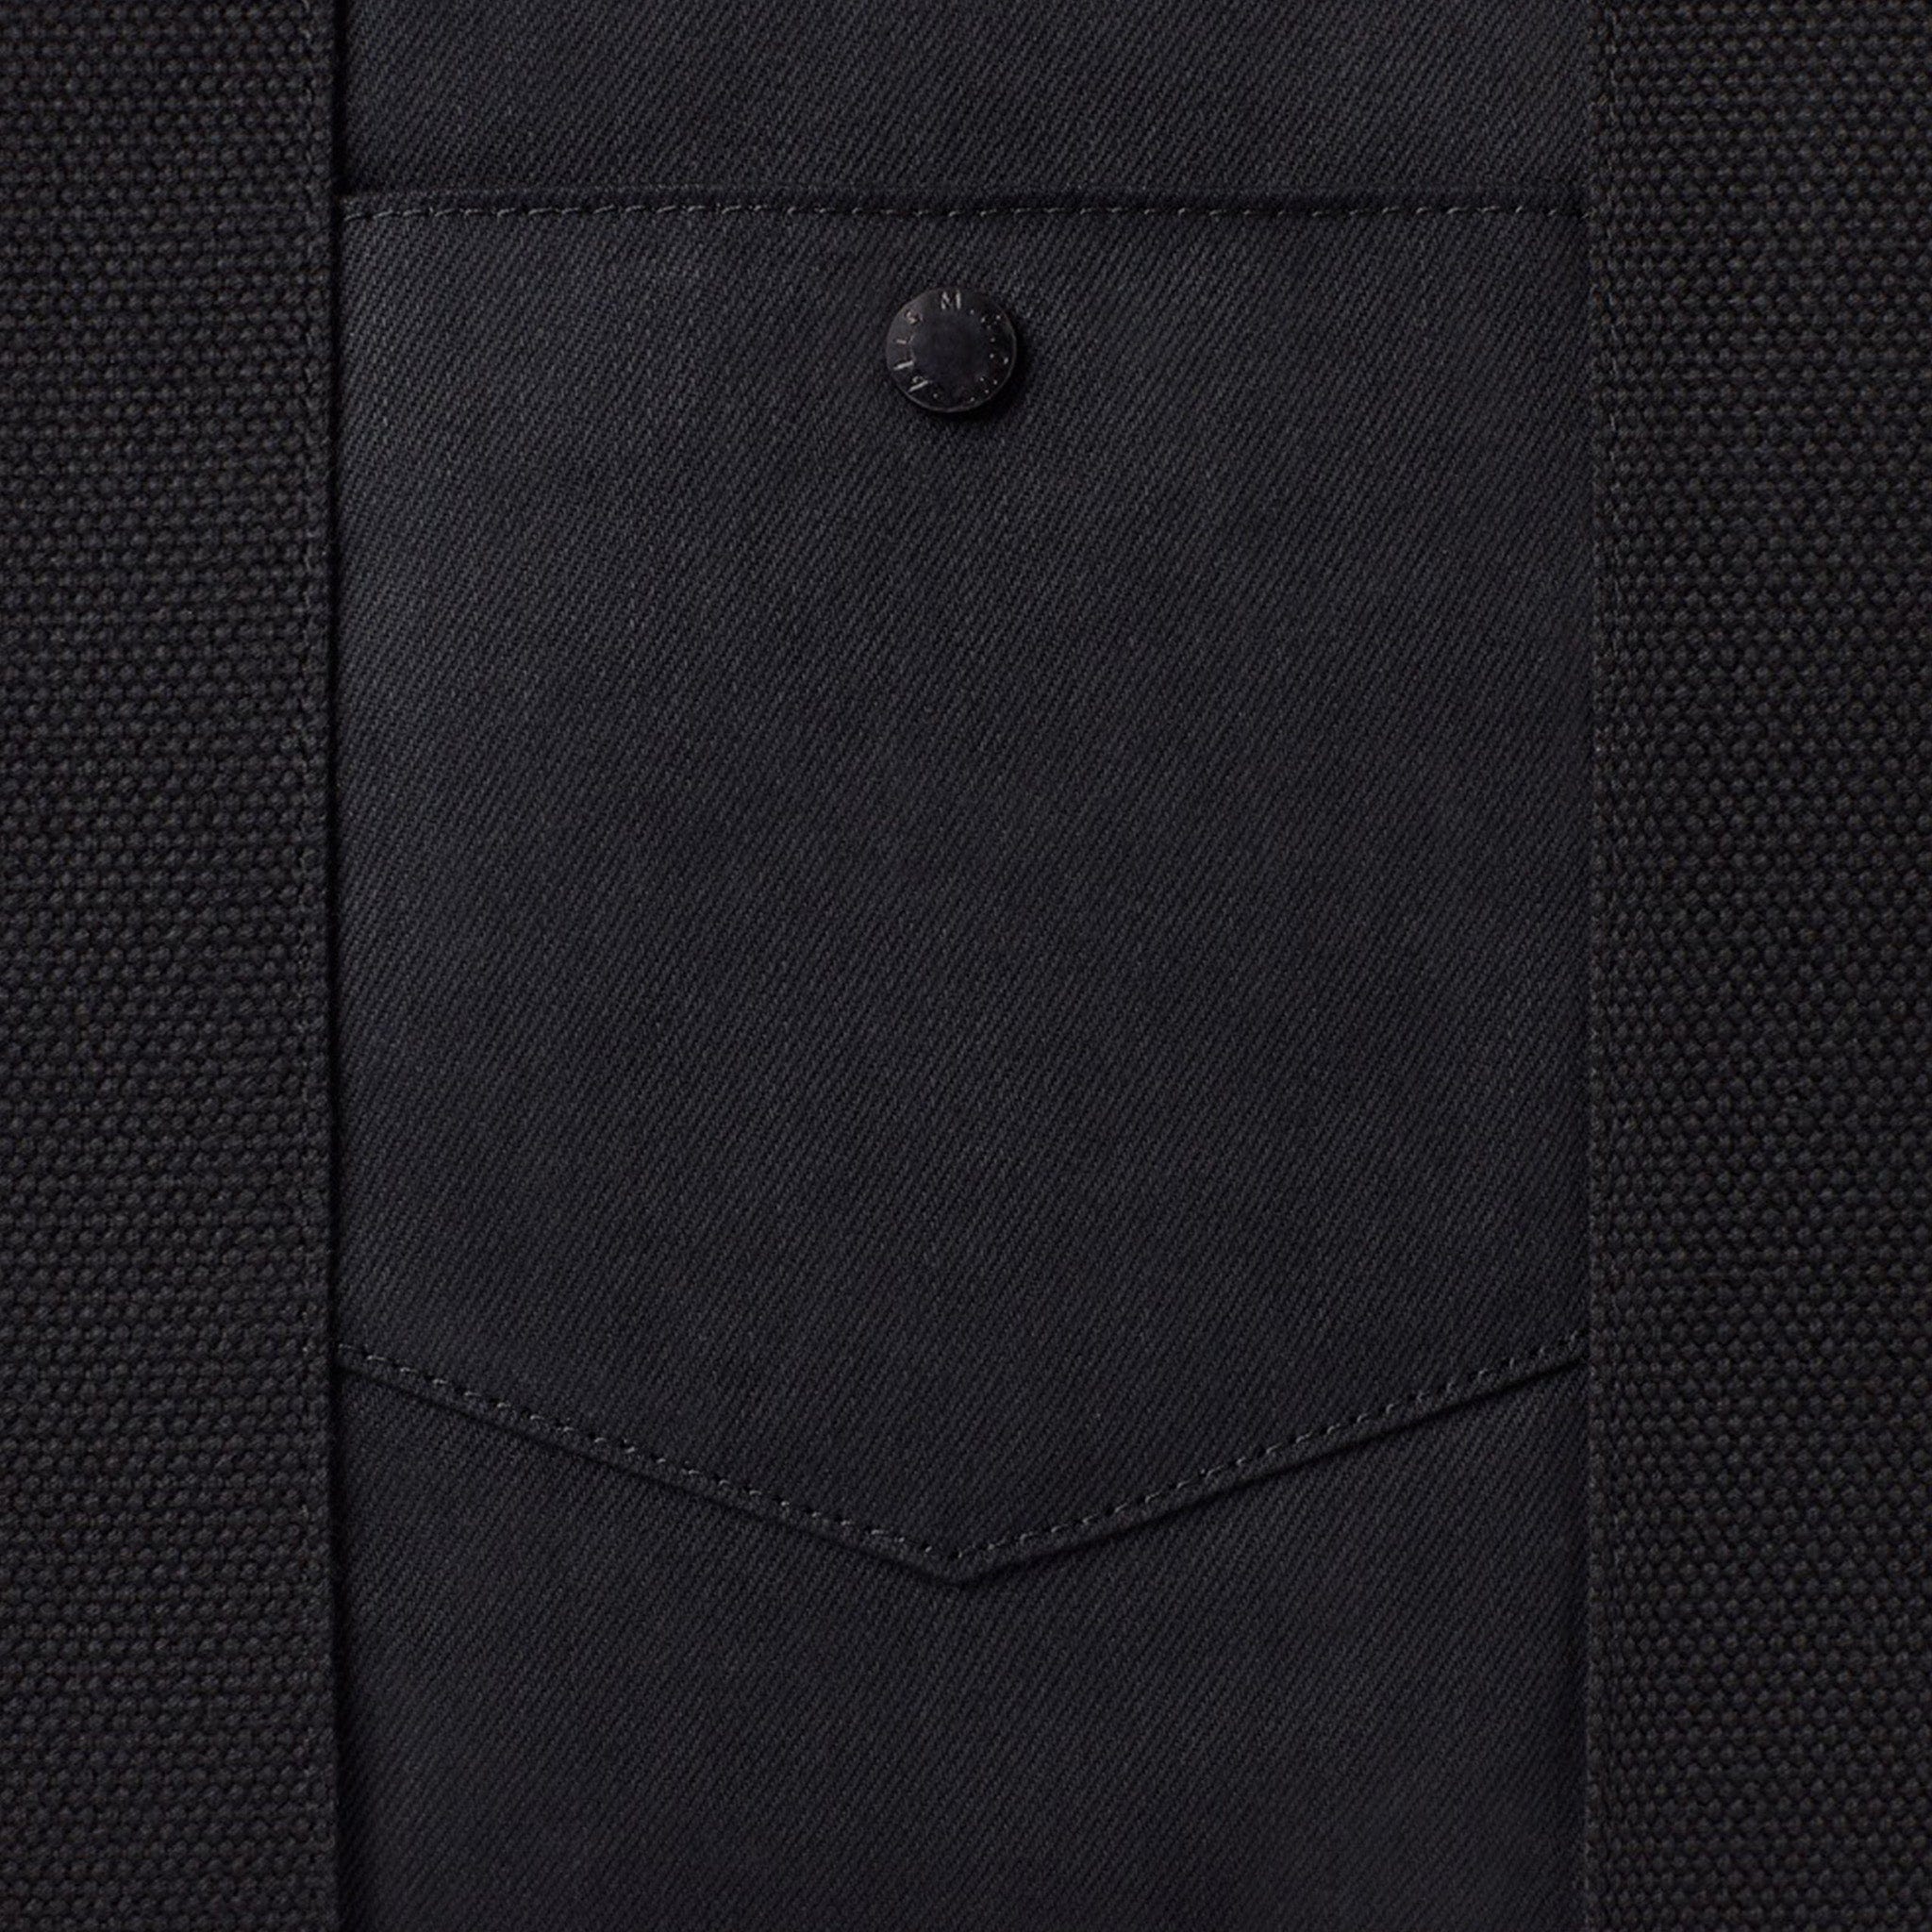 Pocket Tote Denim Bag Black